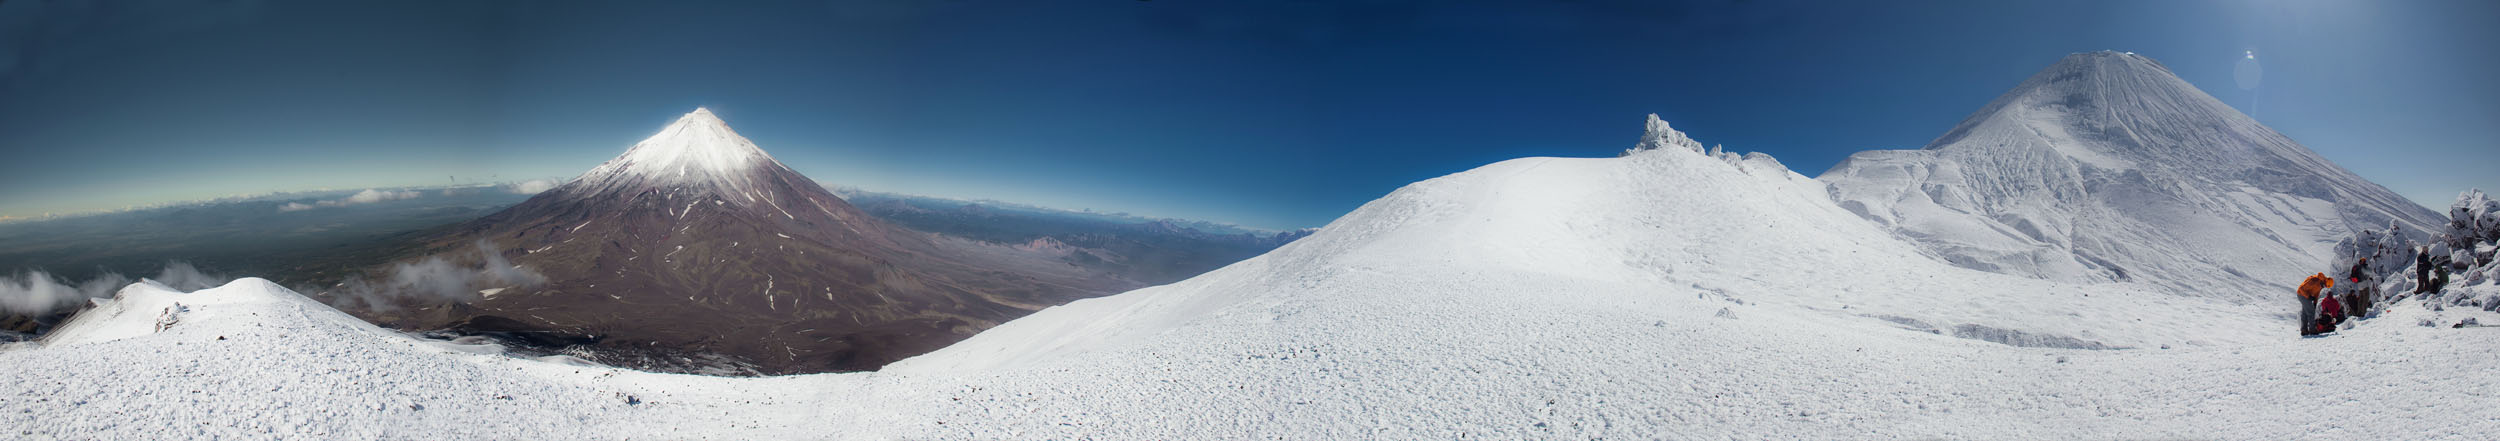 Панорама Авачинского и Корякского вулканов. Вид с воротника Авачи